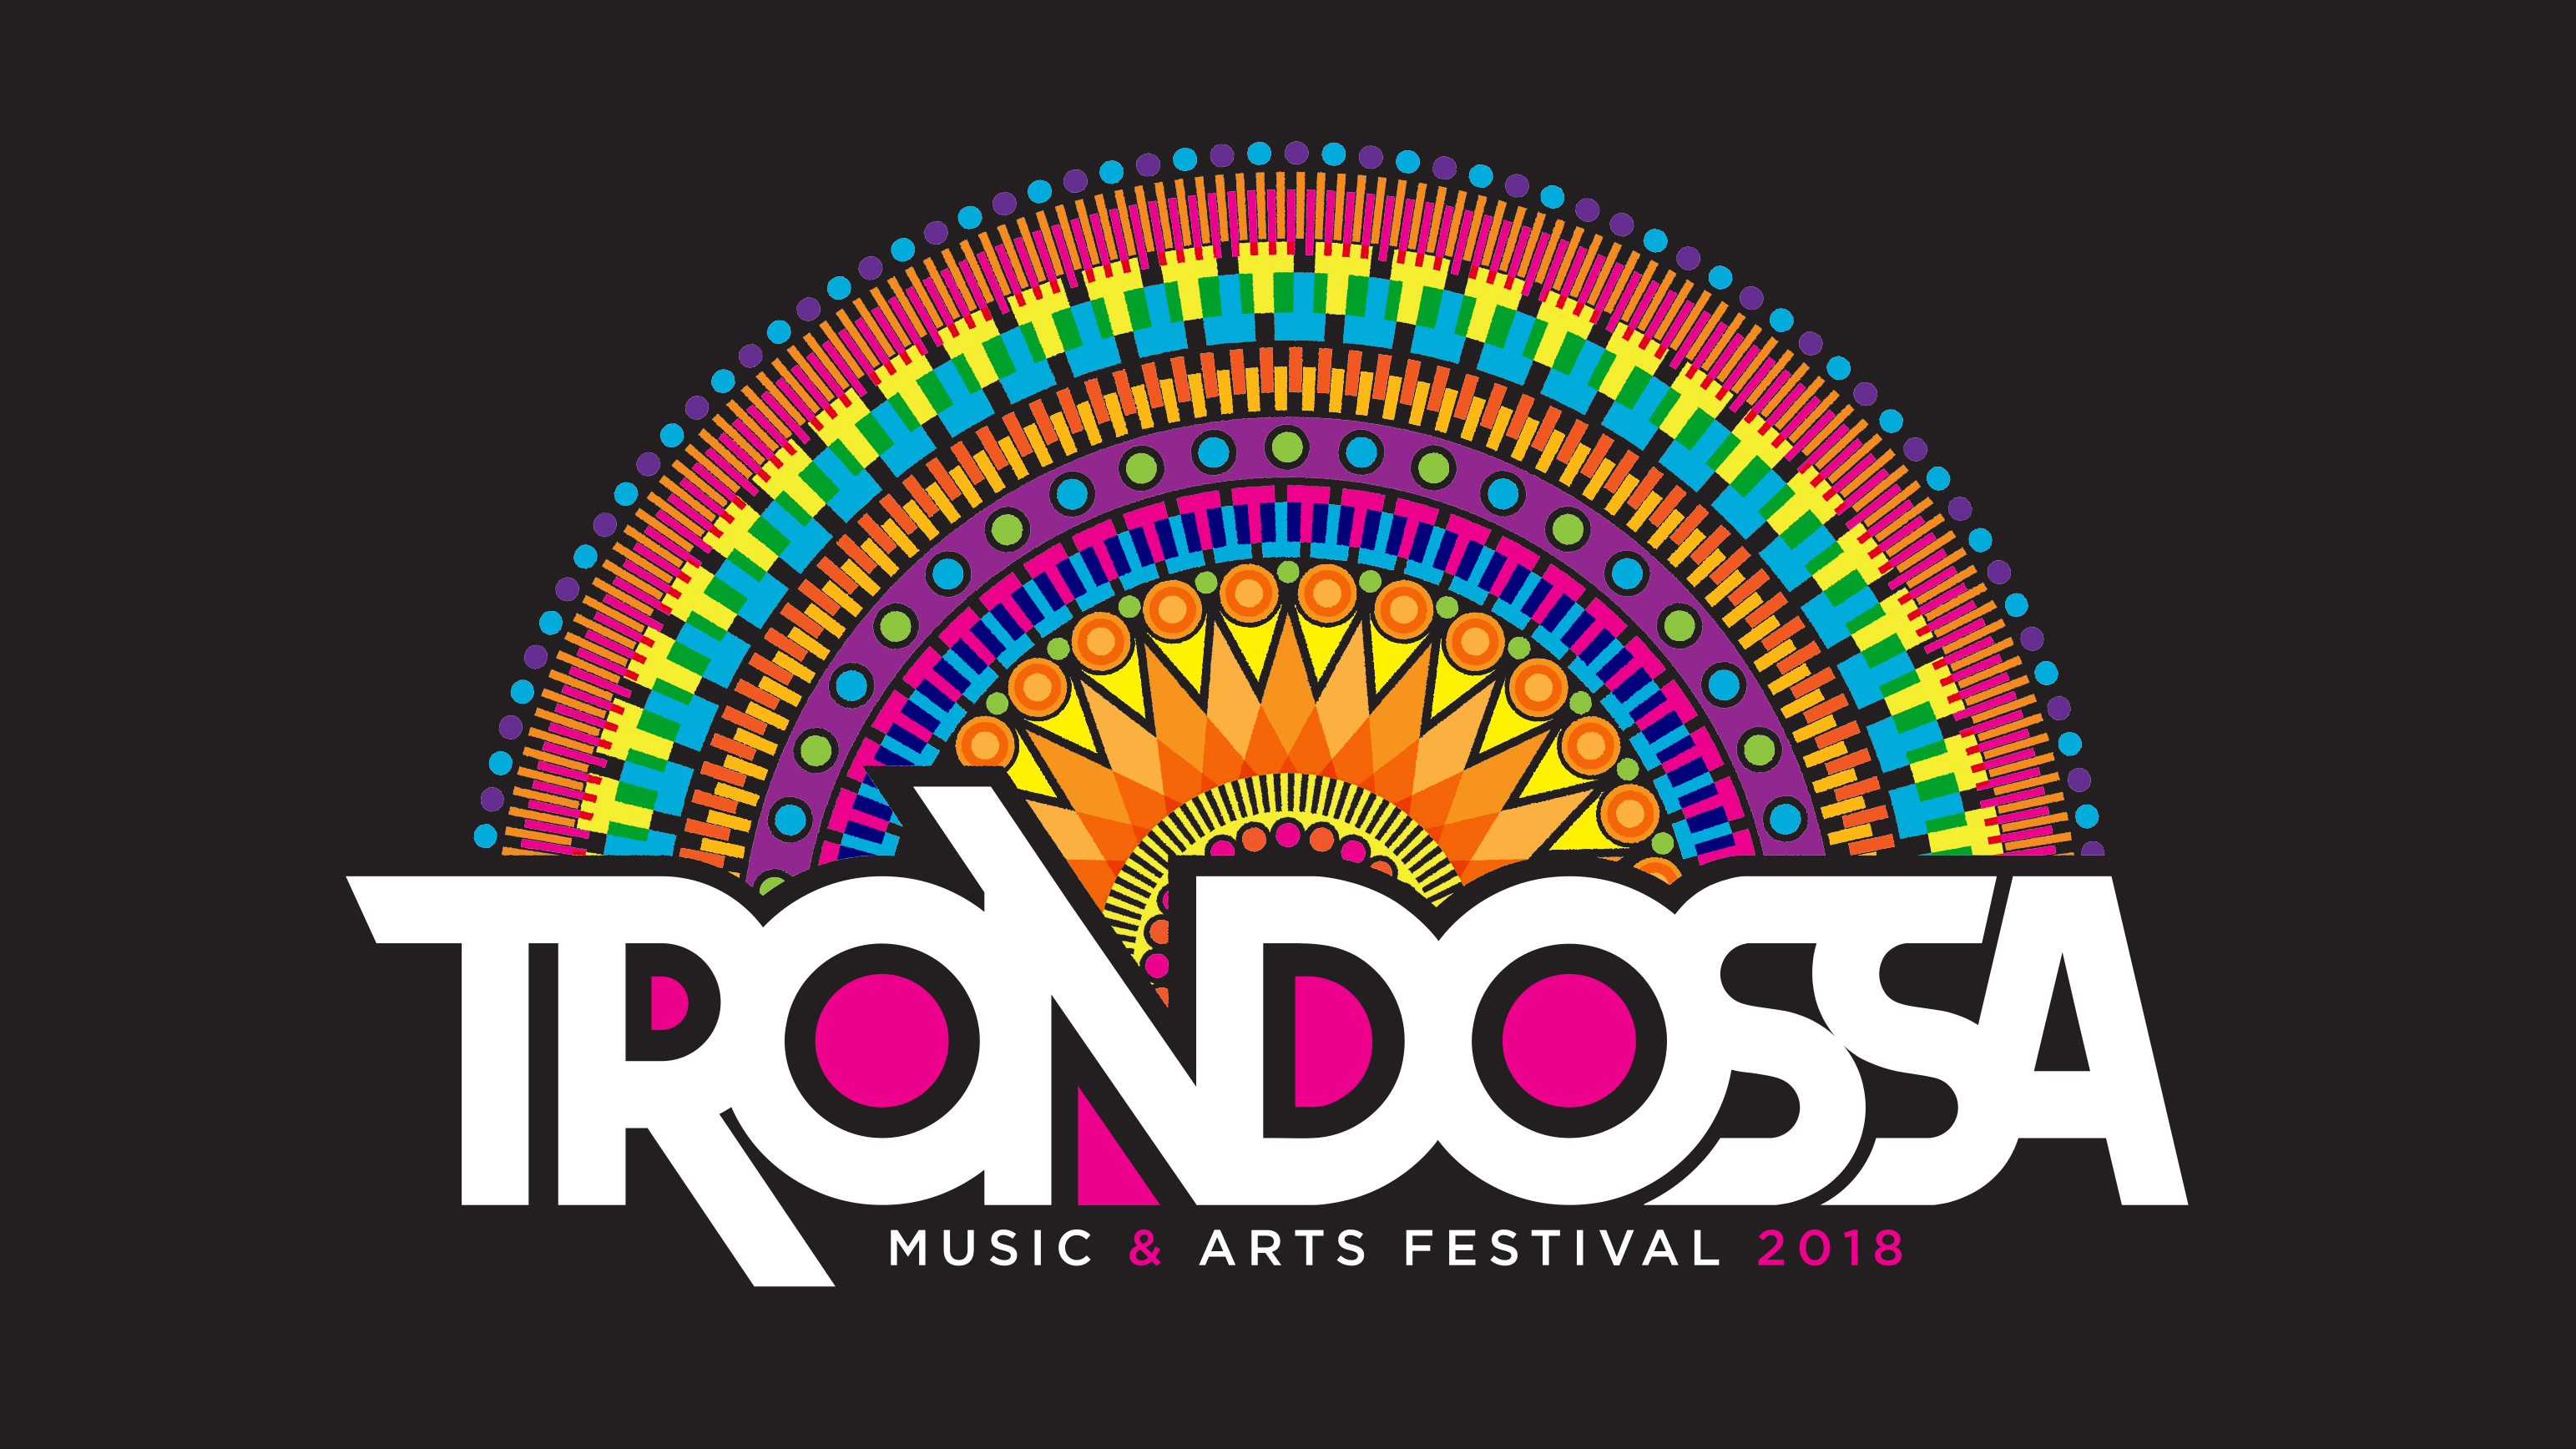 TRONDOSSA MUSIC & ARTS FESTIVAL 2018 ANNOUNCED!